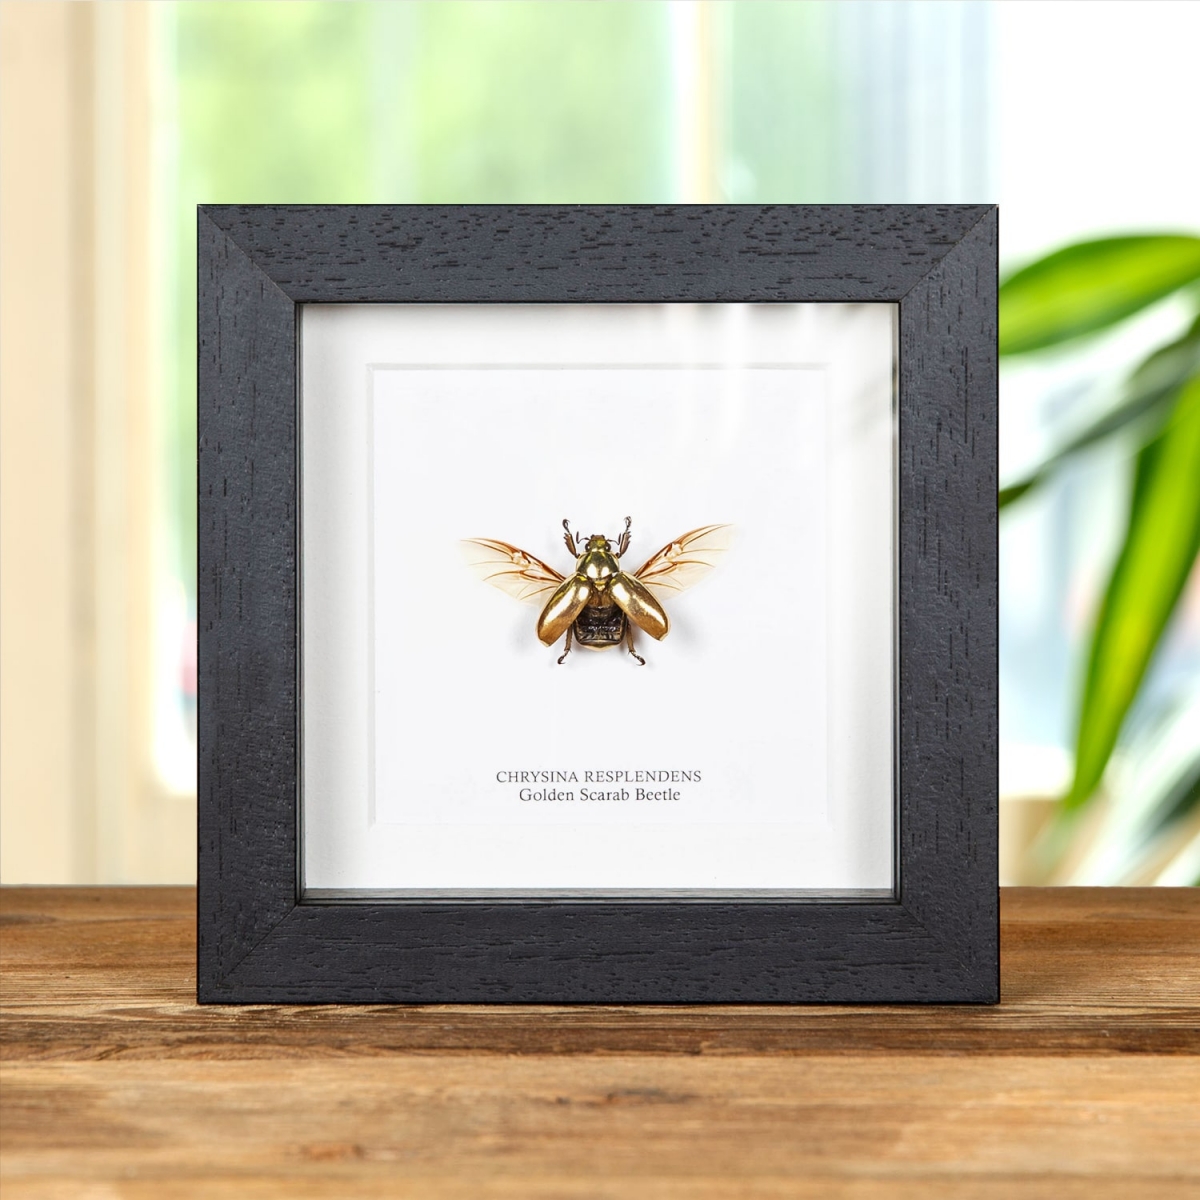 Minibeast Golden Scarab Beetle With Wings Spread in Box Frame (Chrysina resplendens)